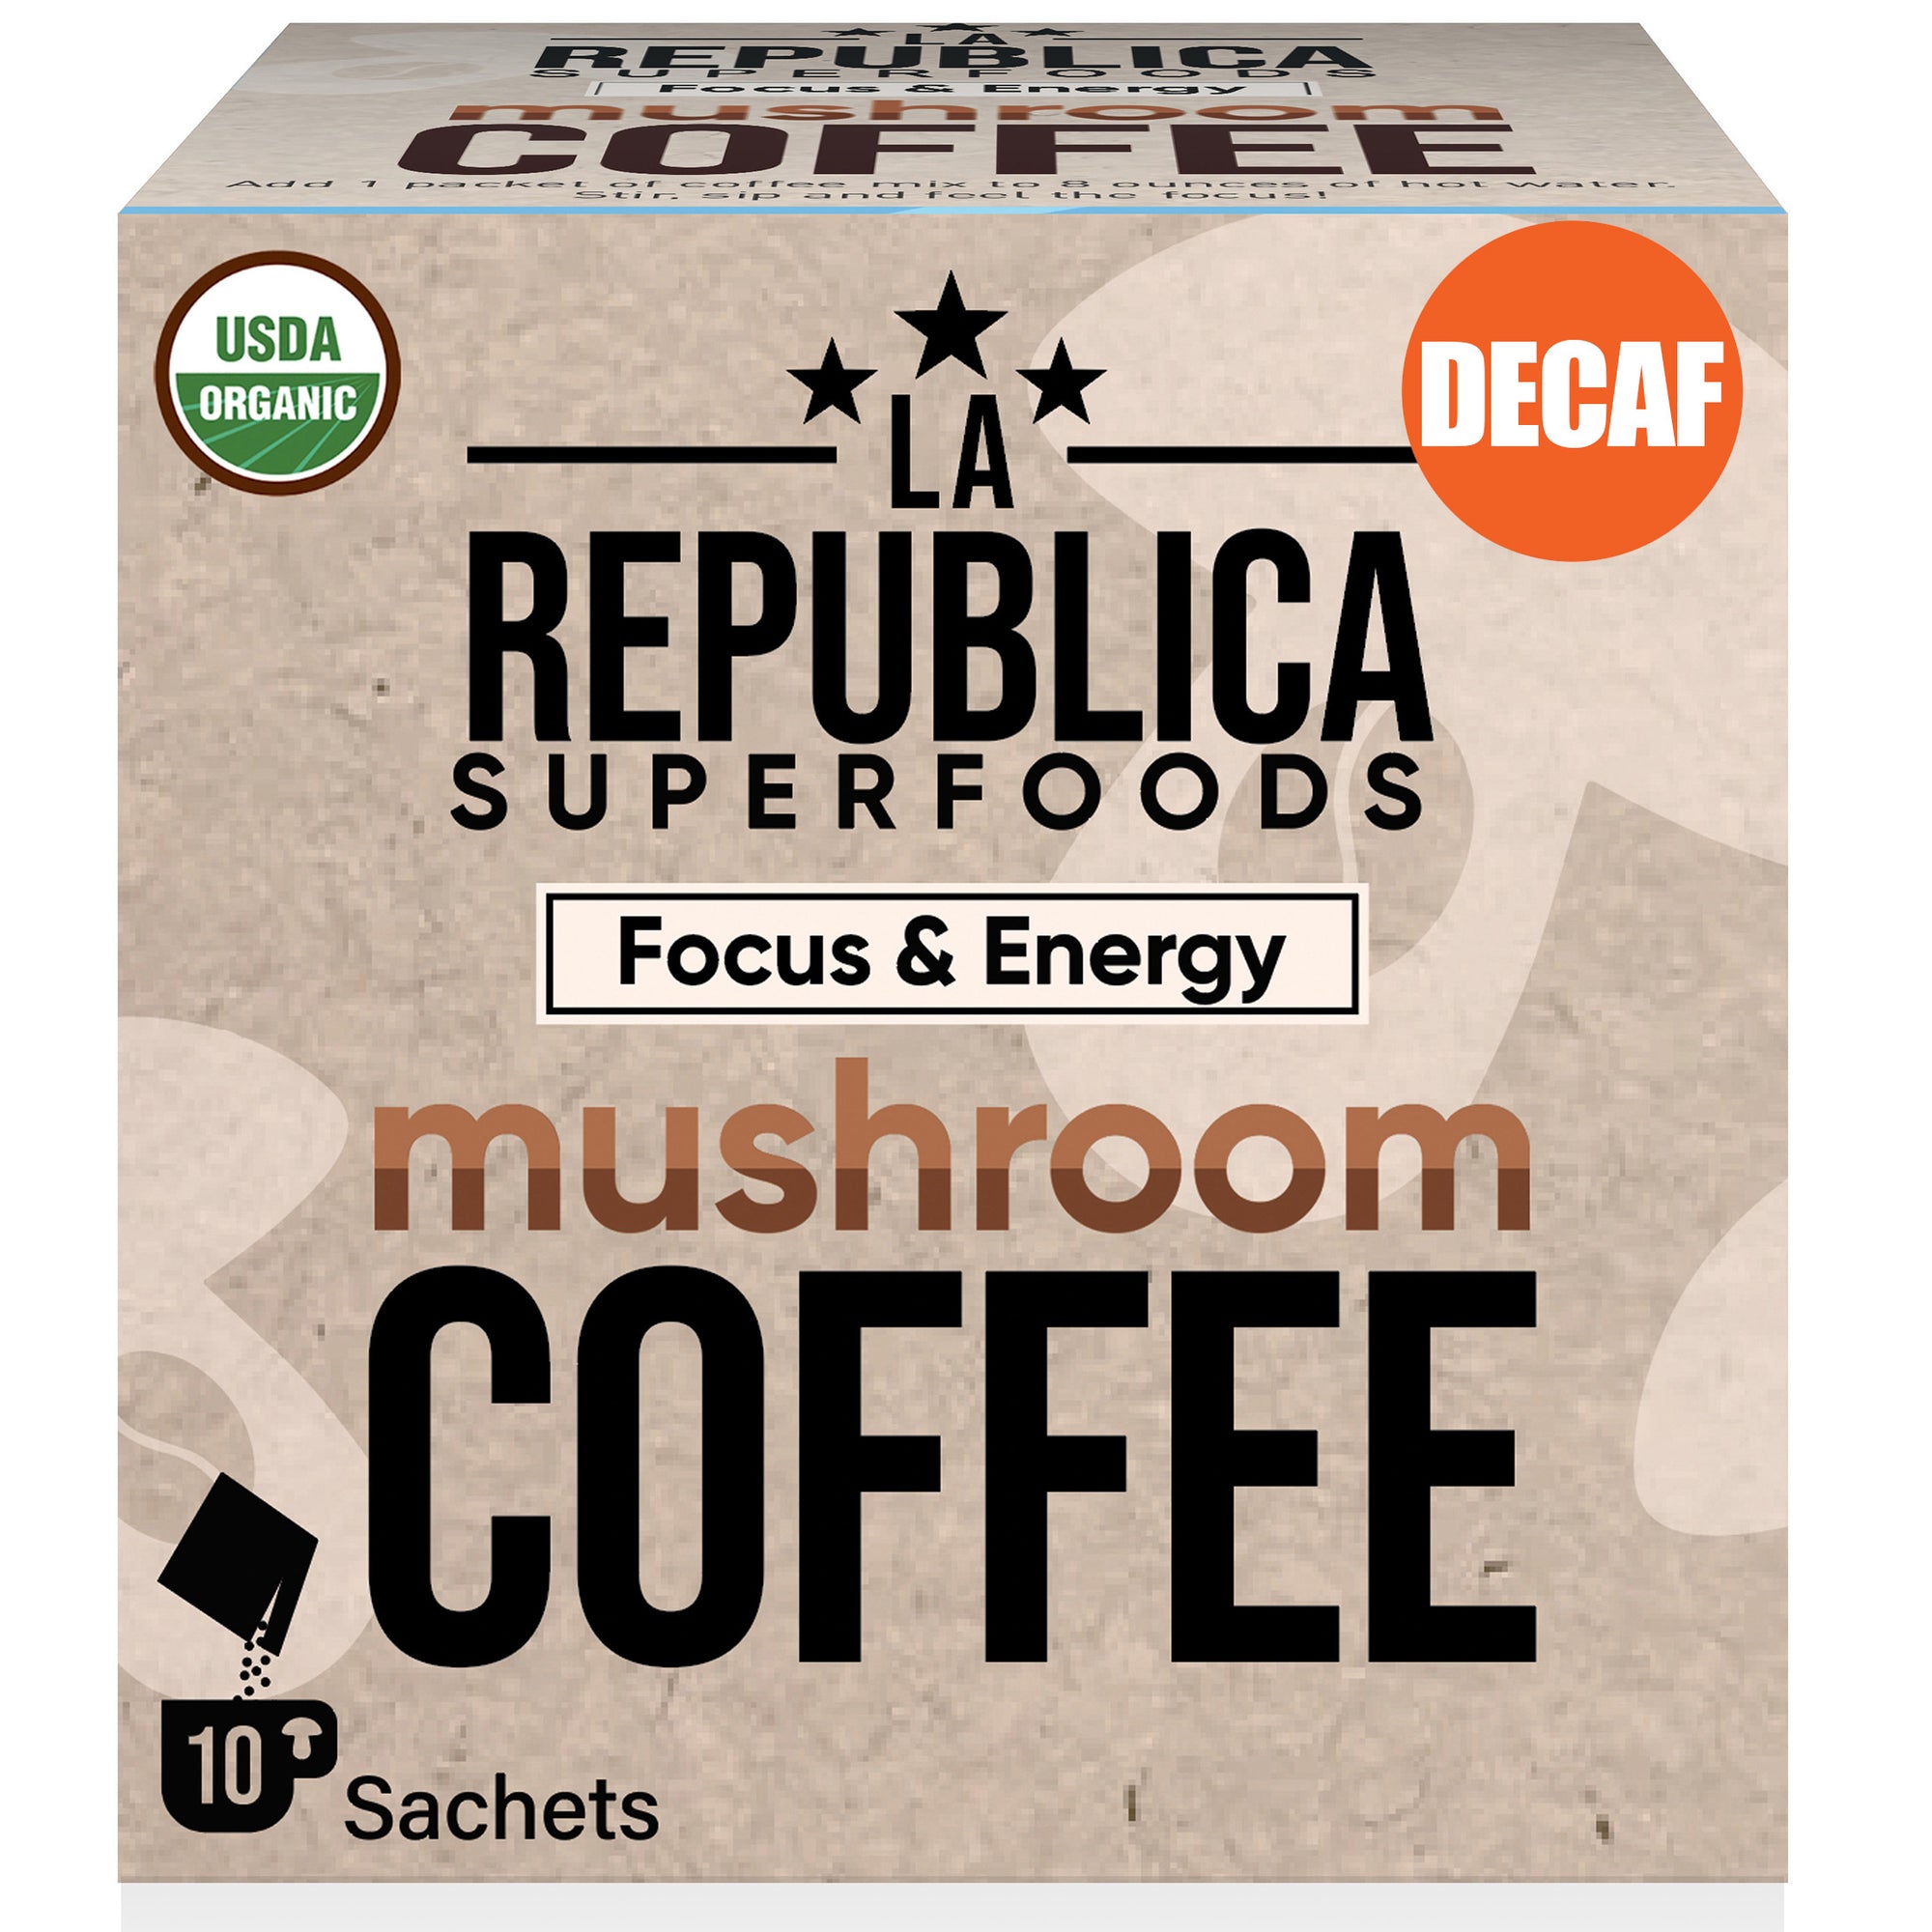 DECAF Mushroom Coffee 10-Pack Box